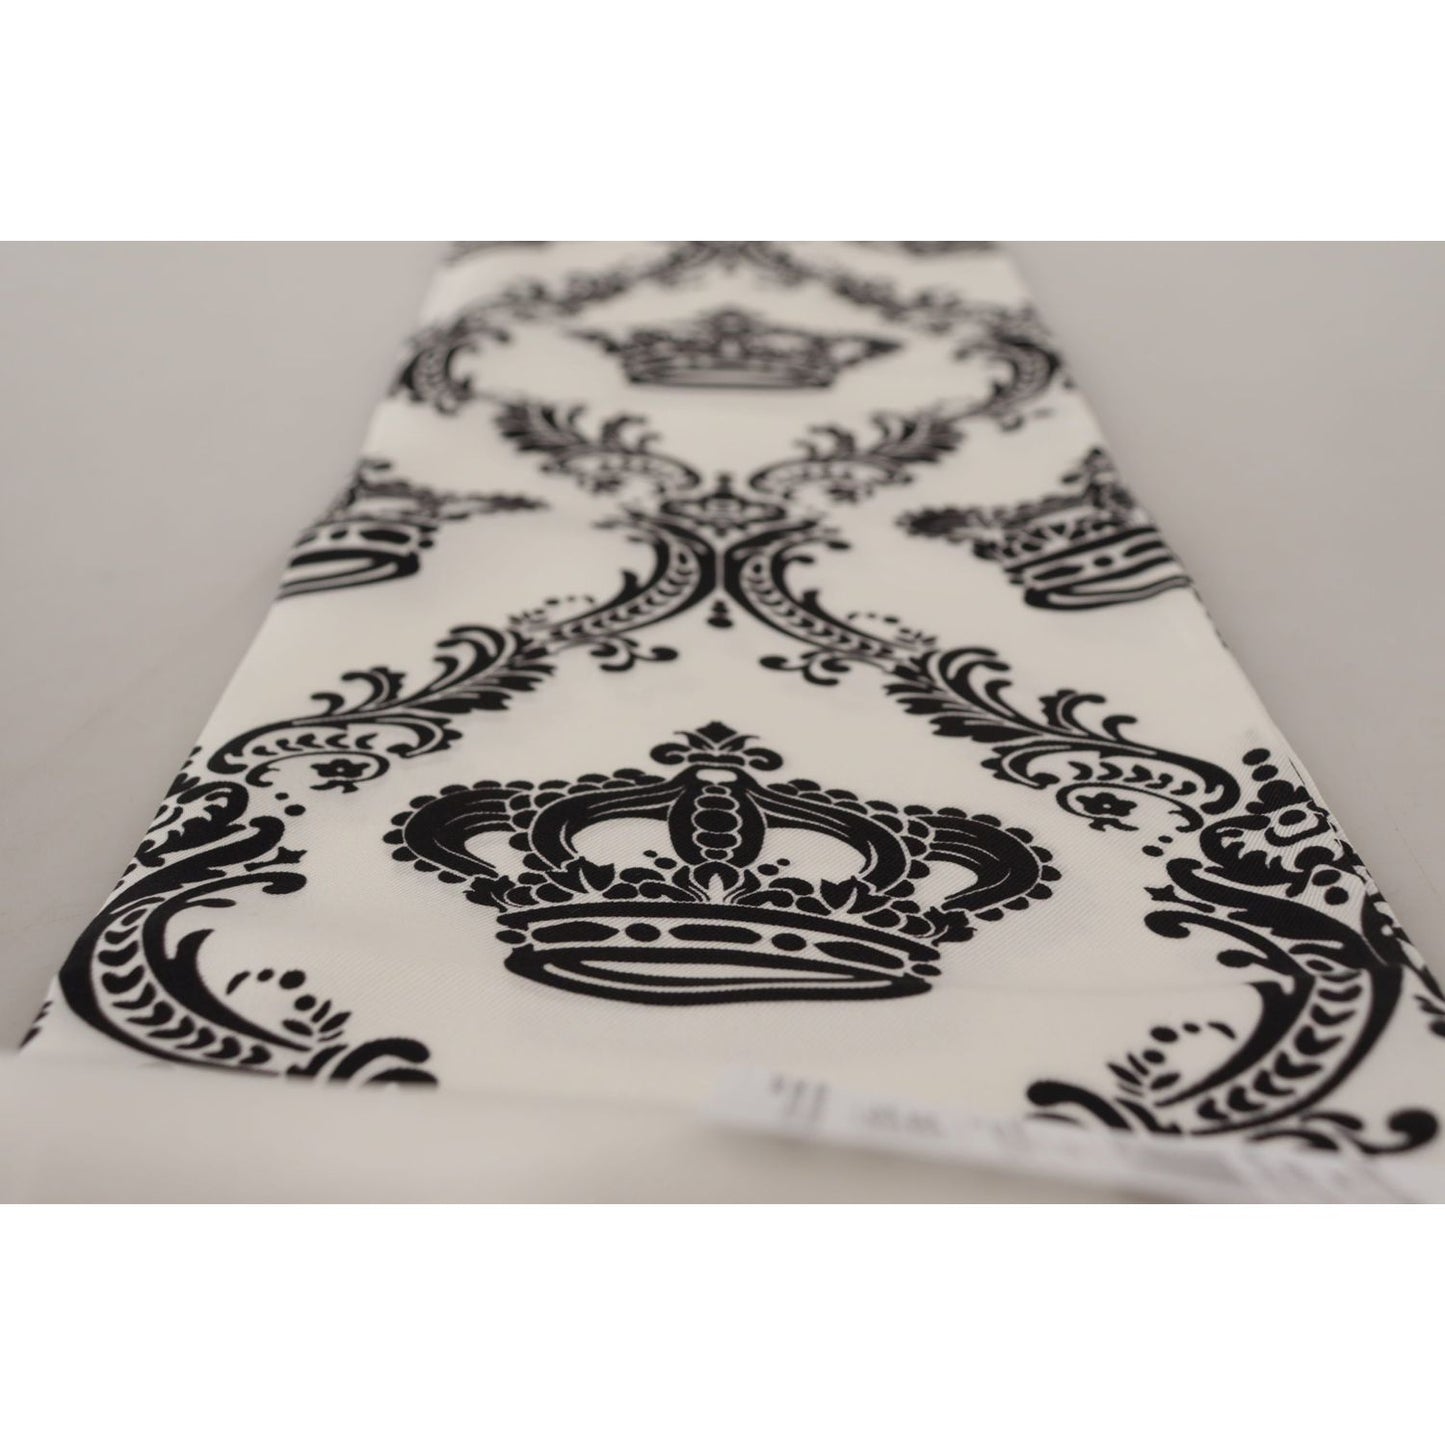 Dolce & Gabbana Royal Crown Printed Silk Men's Scarf royal-crown-printed-silk-mens-scarf